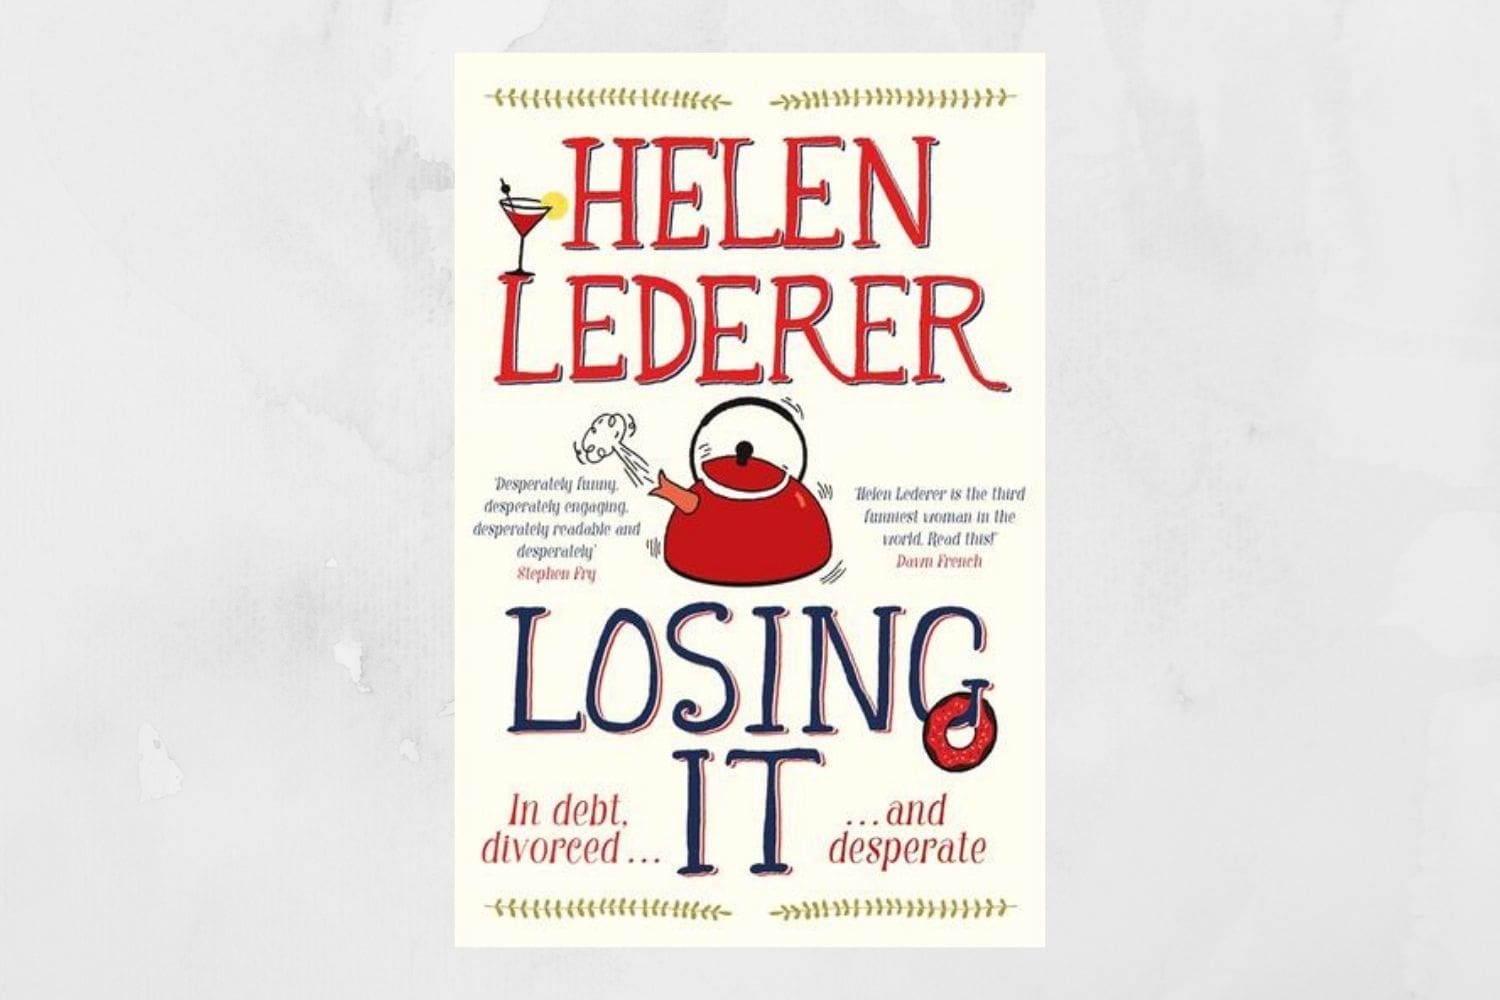 Losing It by Helen Lederer book cover